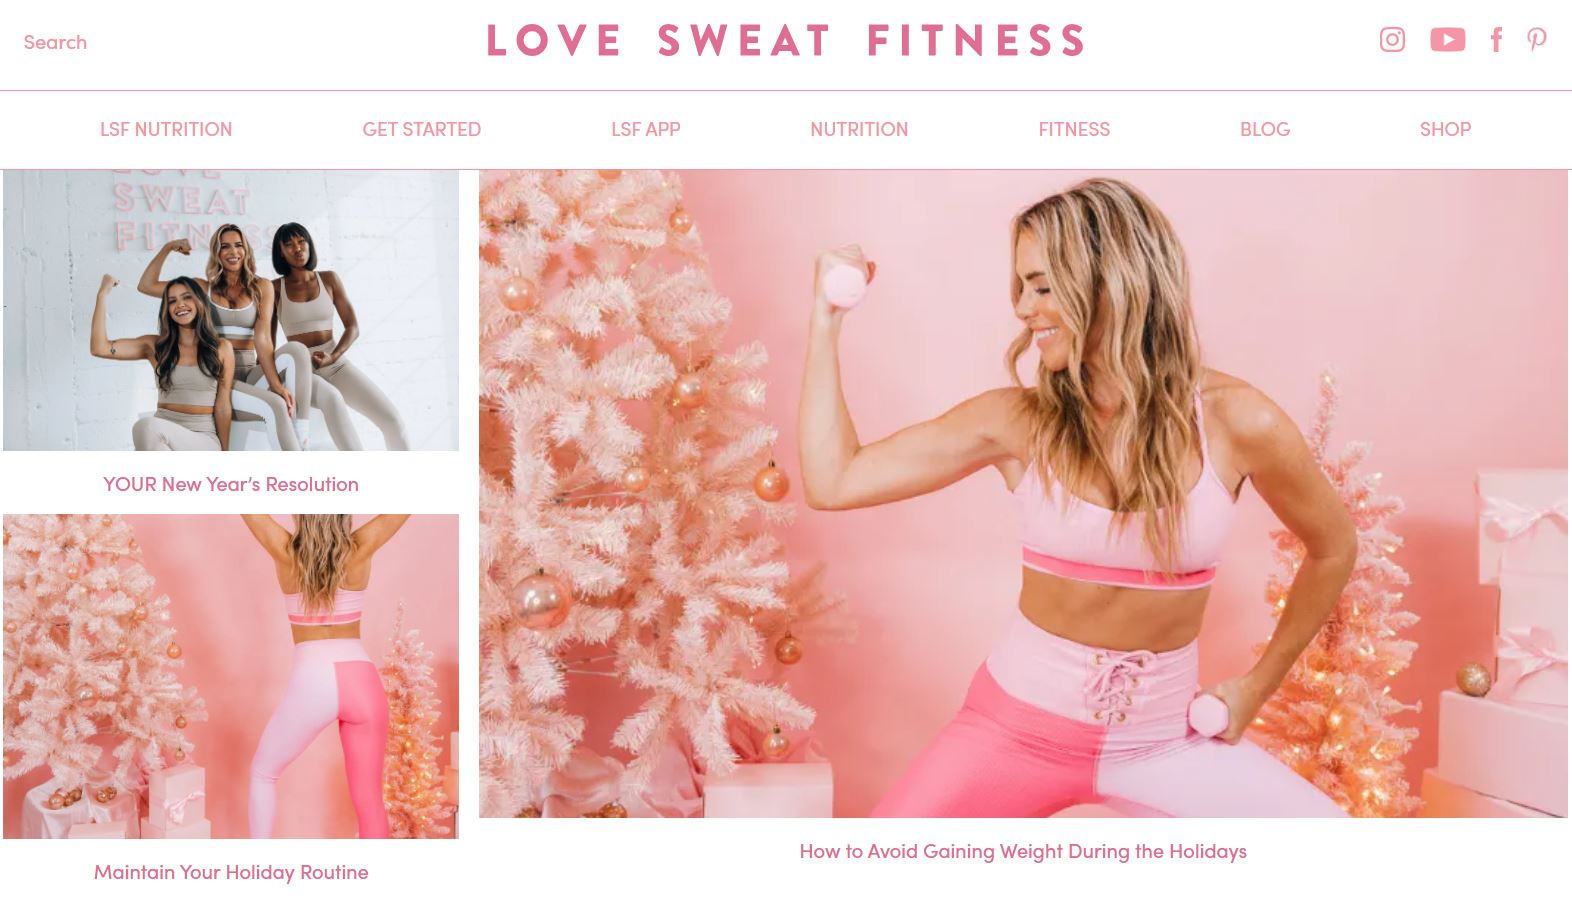 Love Sweat Fitness 博客是最賺錢的博客領域之一； 健康